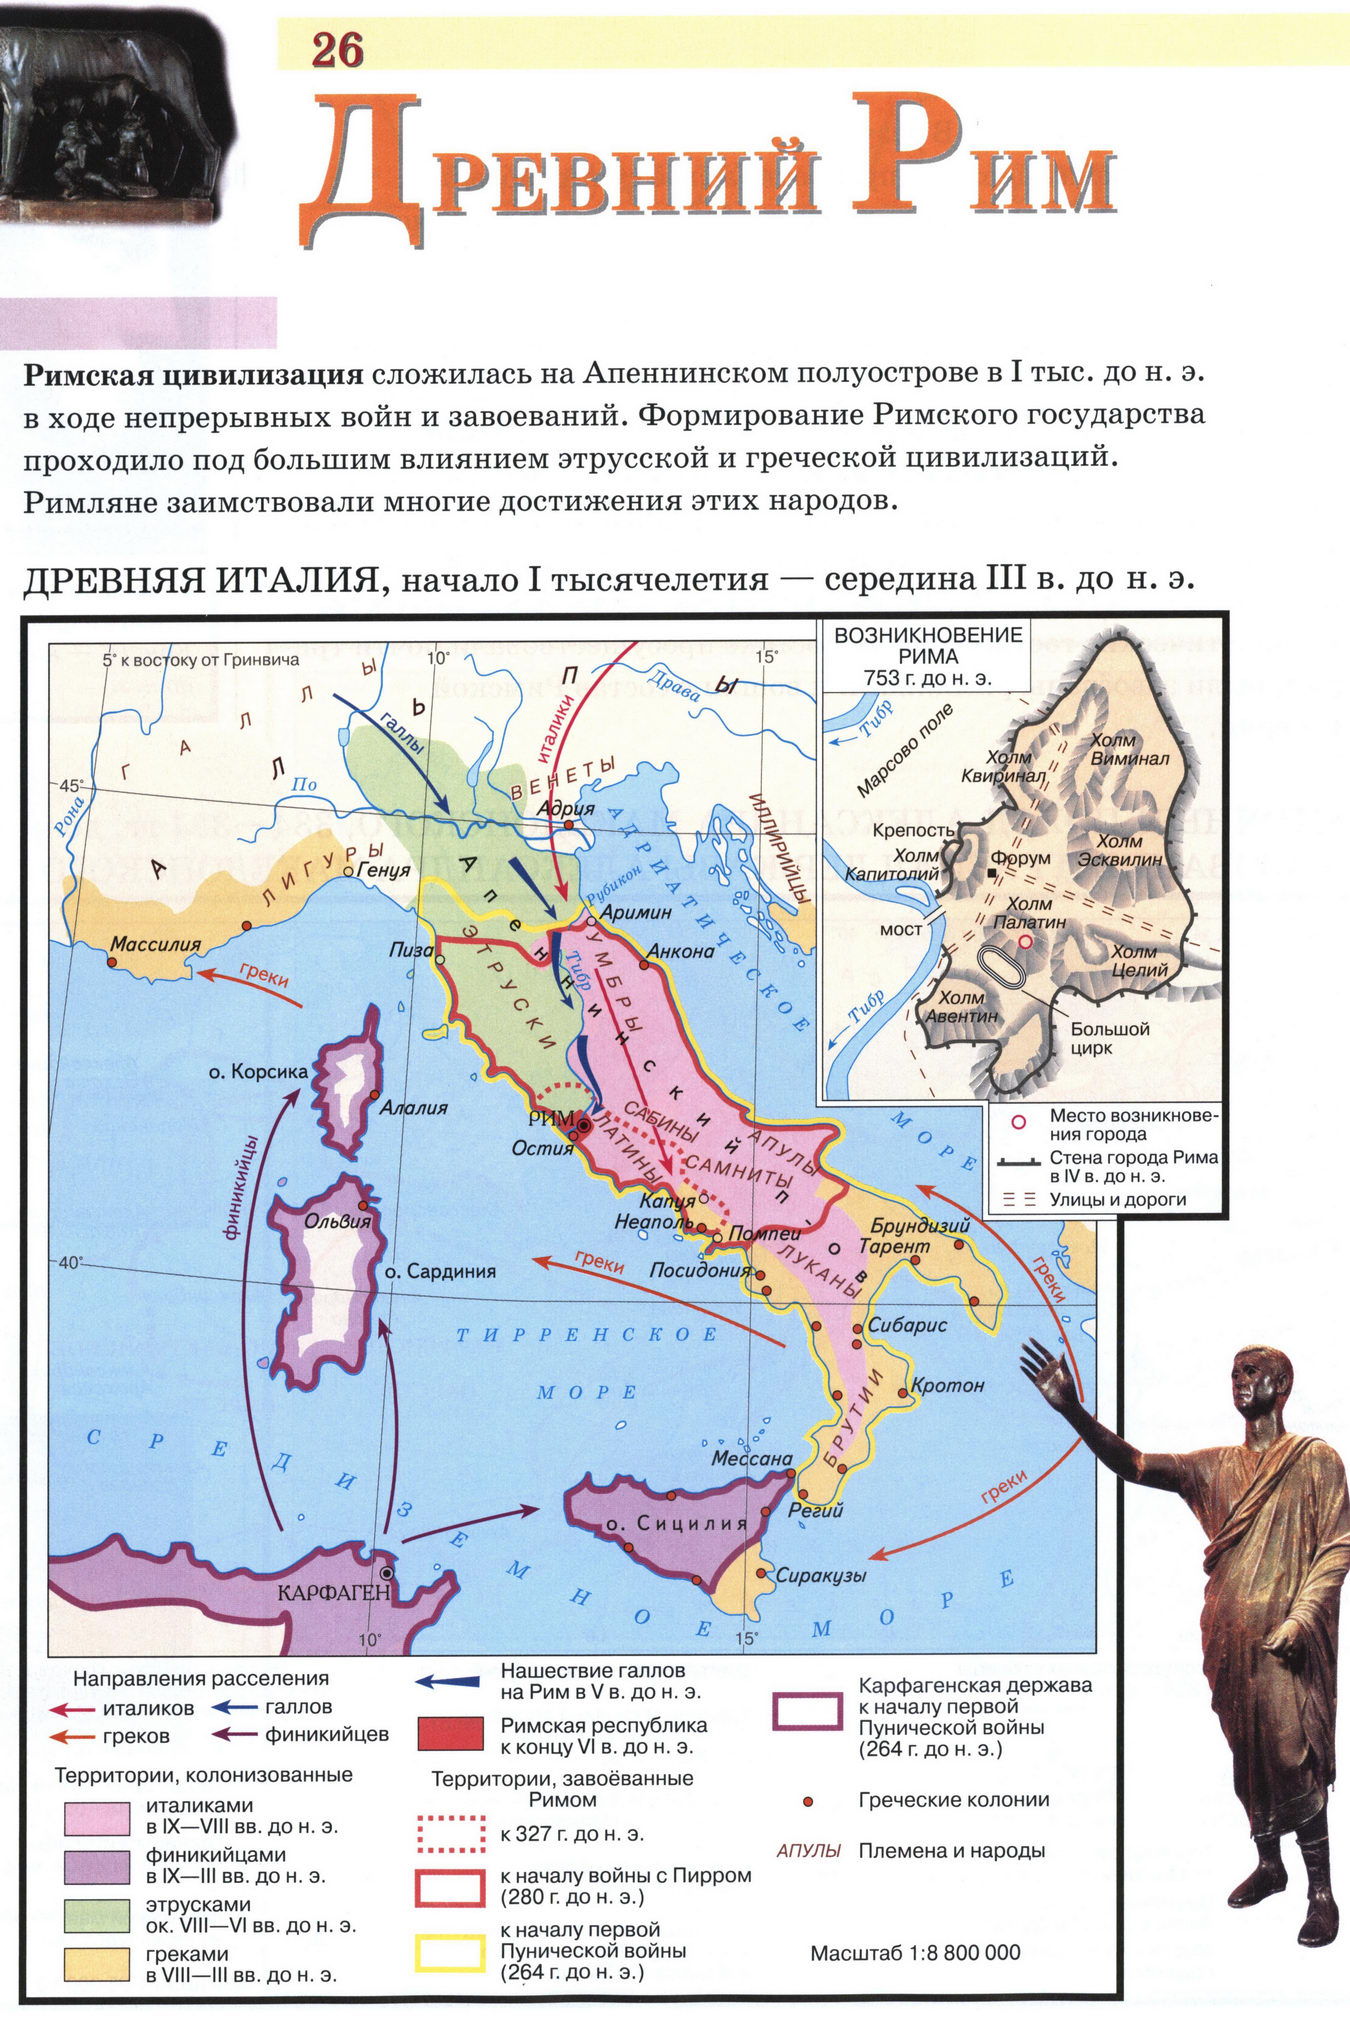 Древний Рим - карта атласа по истории Древнего мира